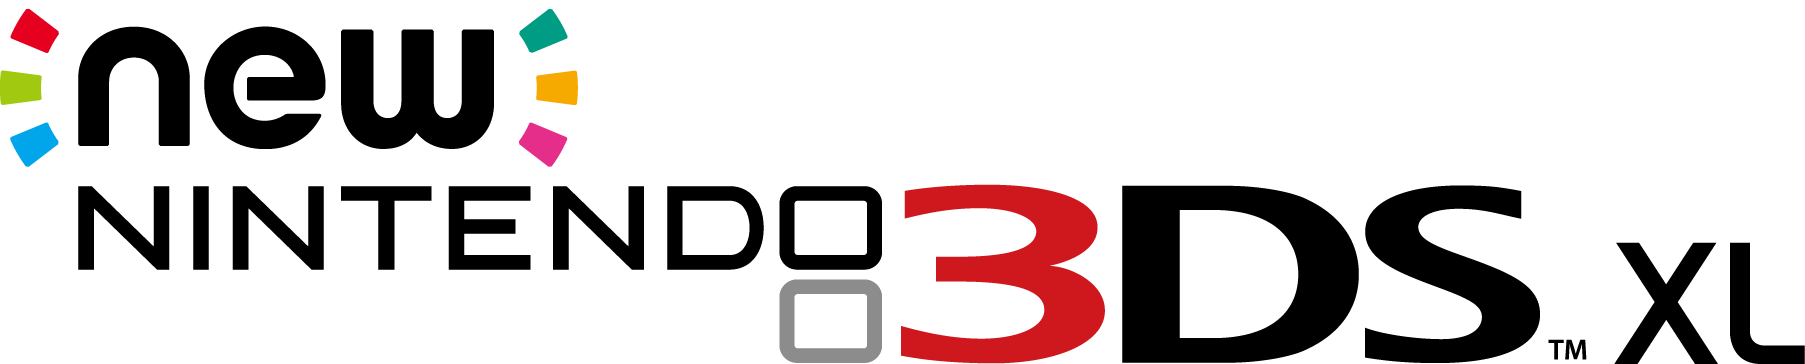 GameStop New Logo - Nintendo NEW 3DS XL for Nintendo 3DS